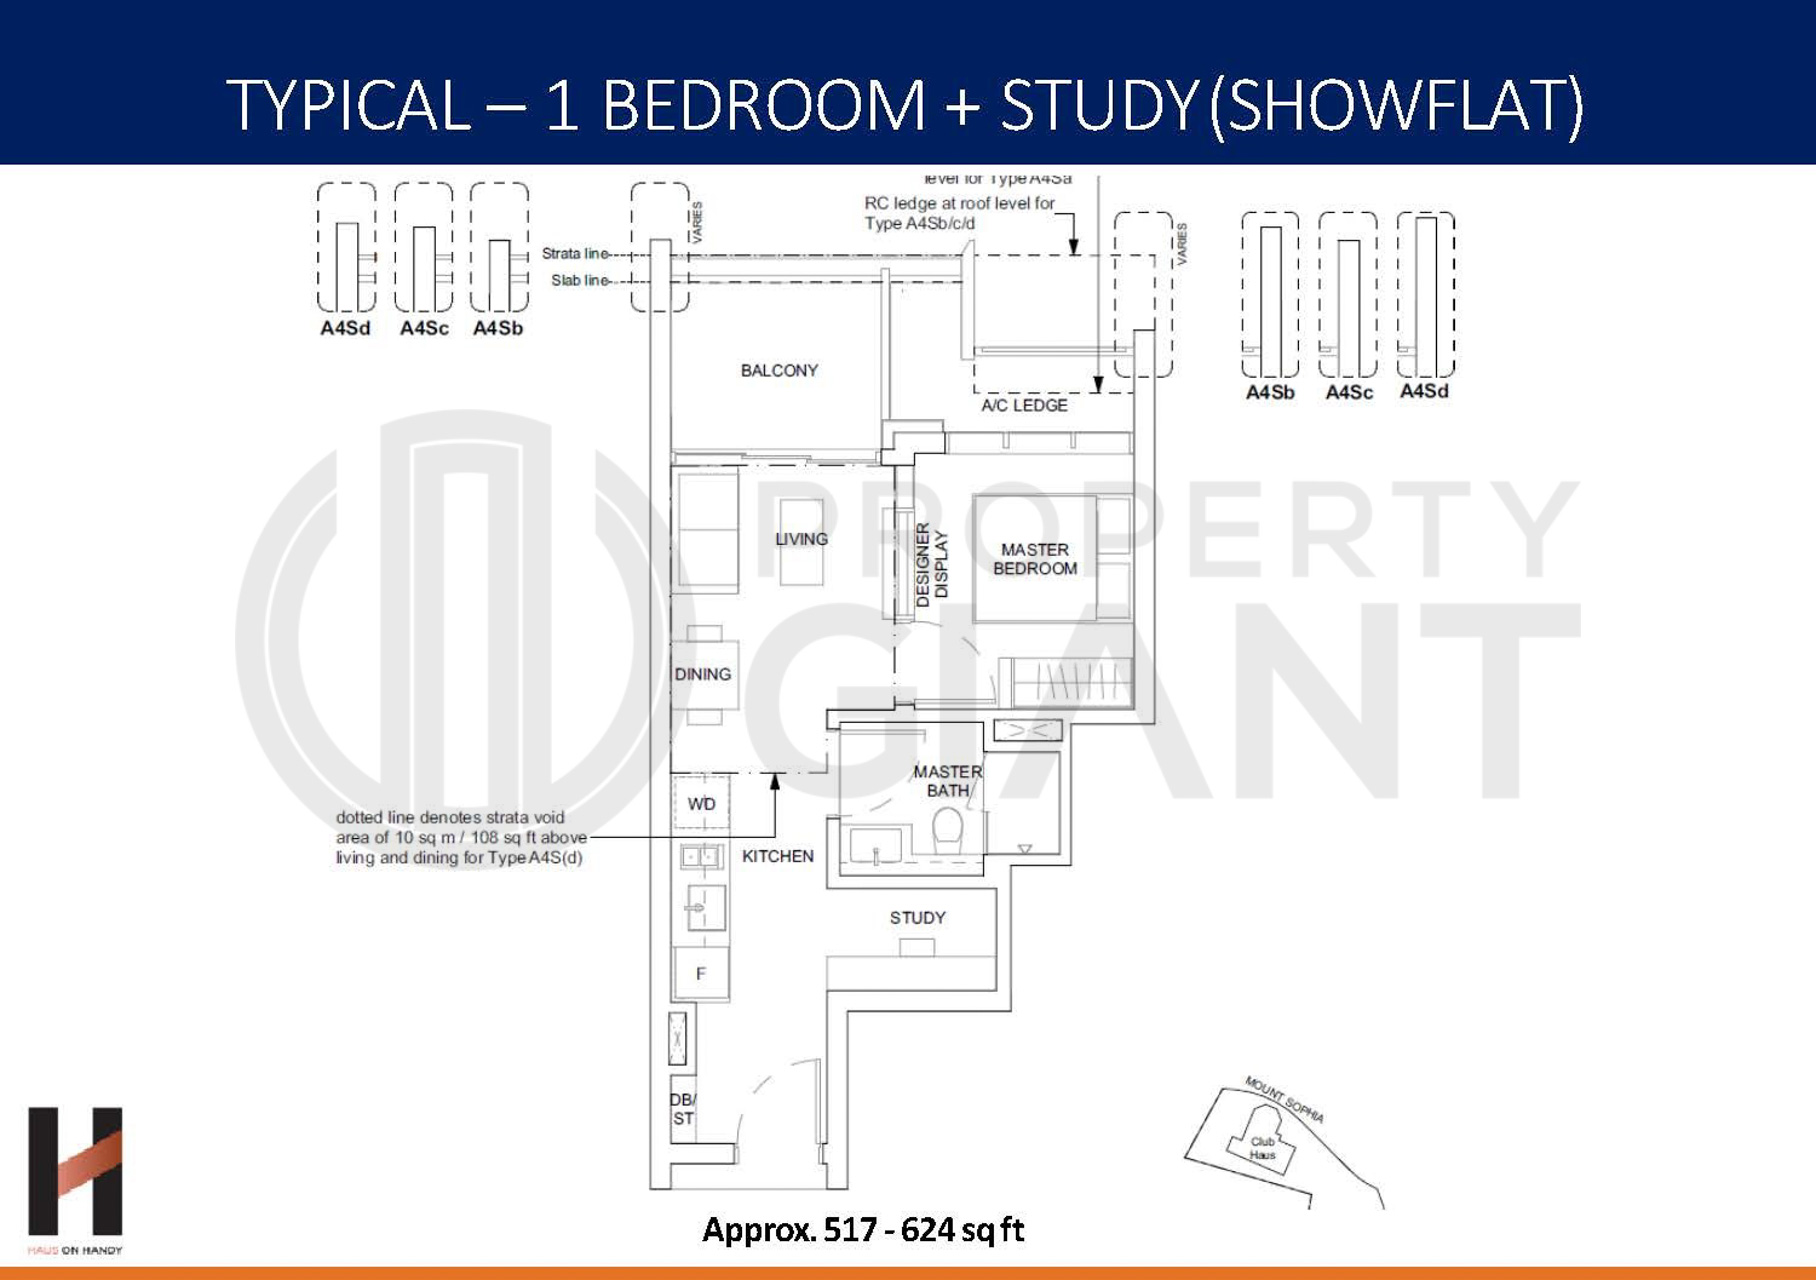 1 Bedroom - Study (Showflat)